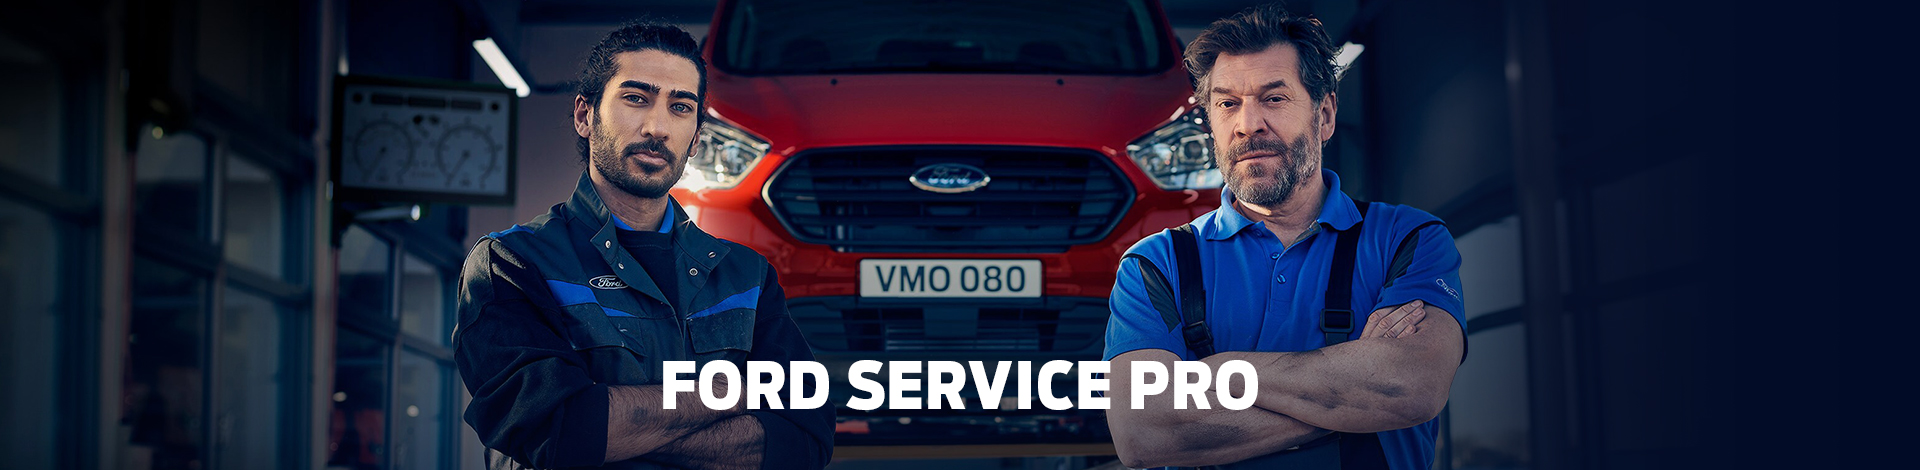 /ford/vans service-pro (Always on Banner)